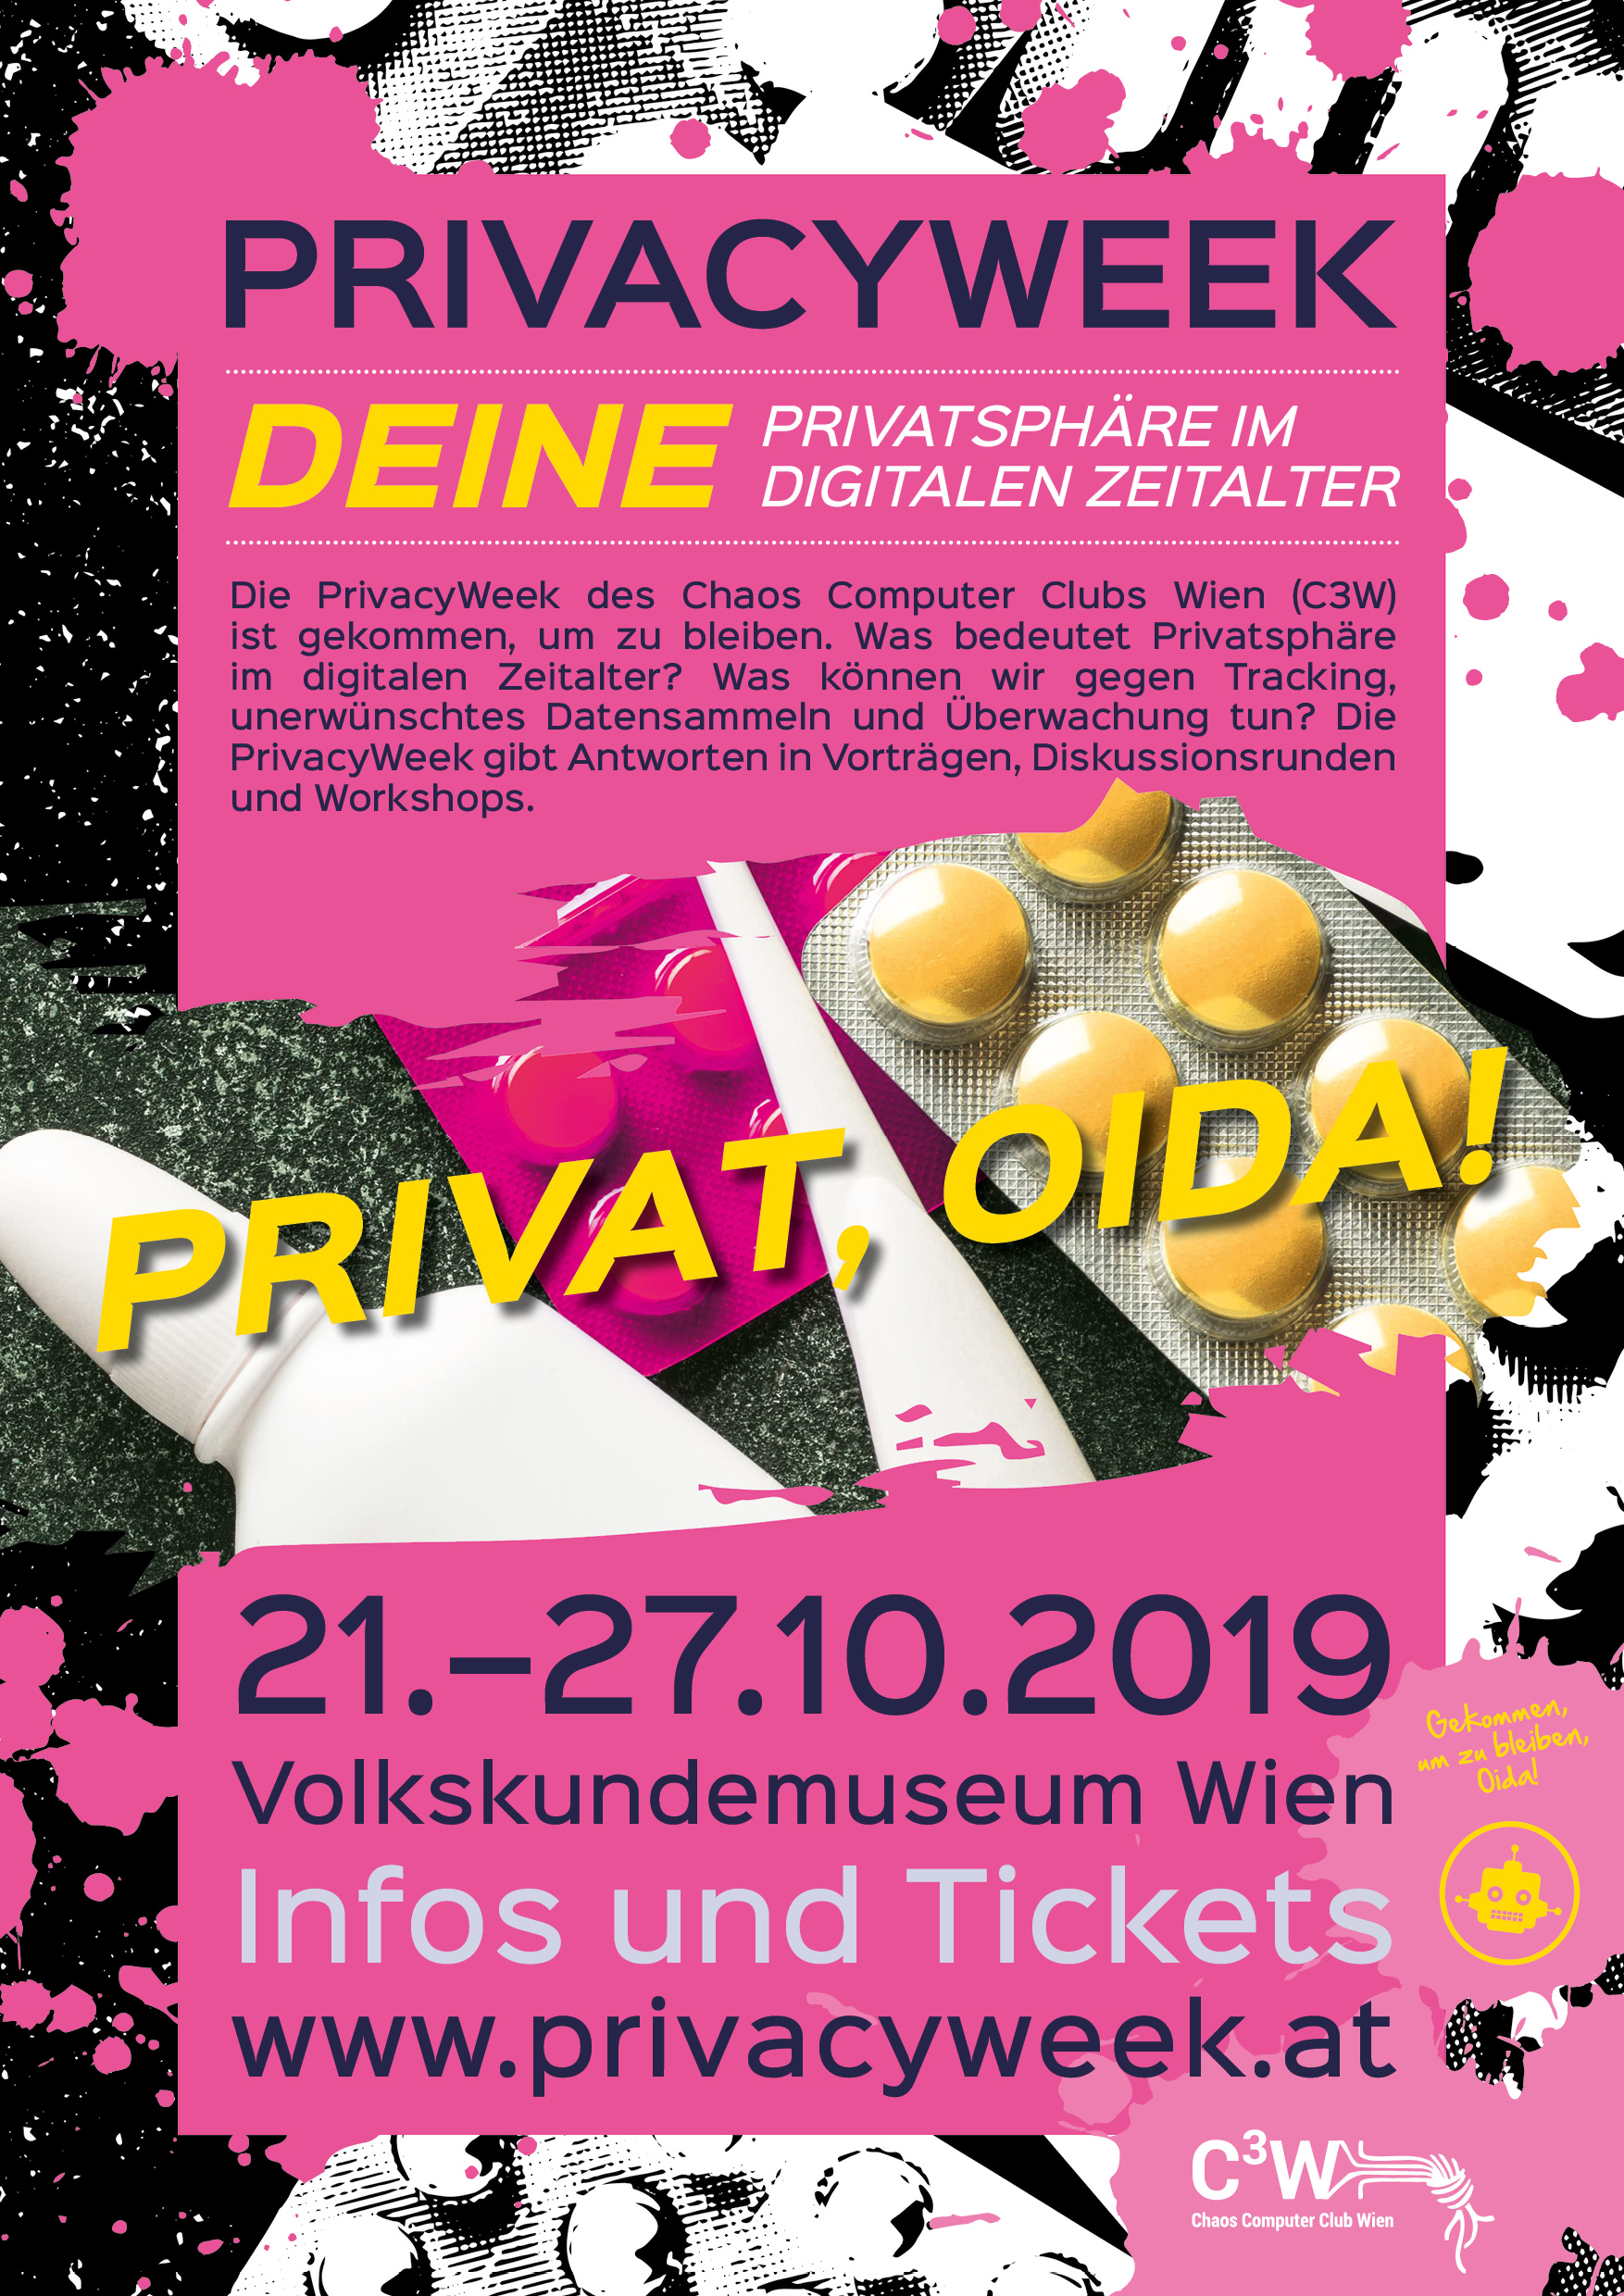 Plakat PrivacyWeek 2019: Privat, Oida!